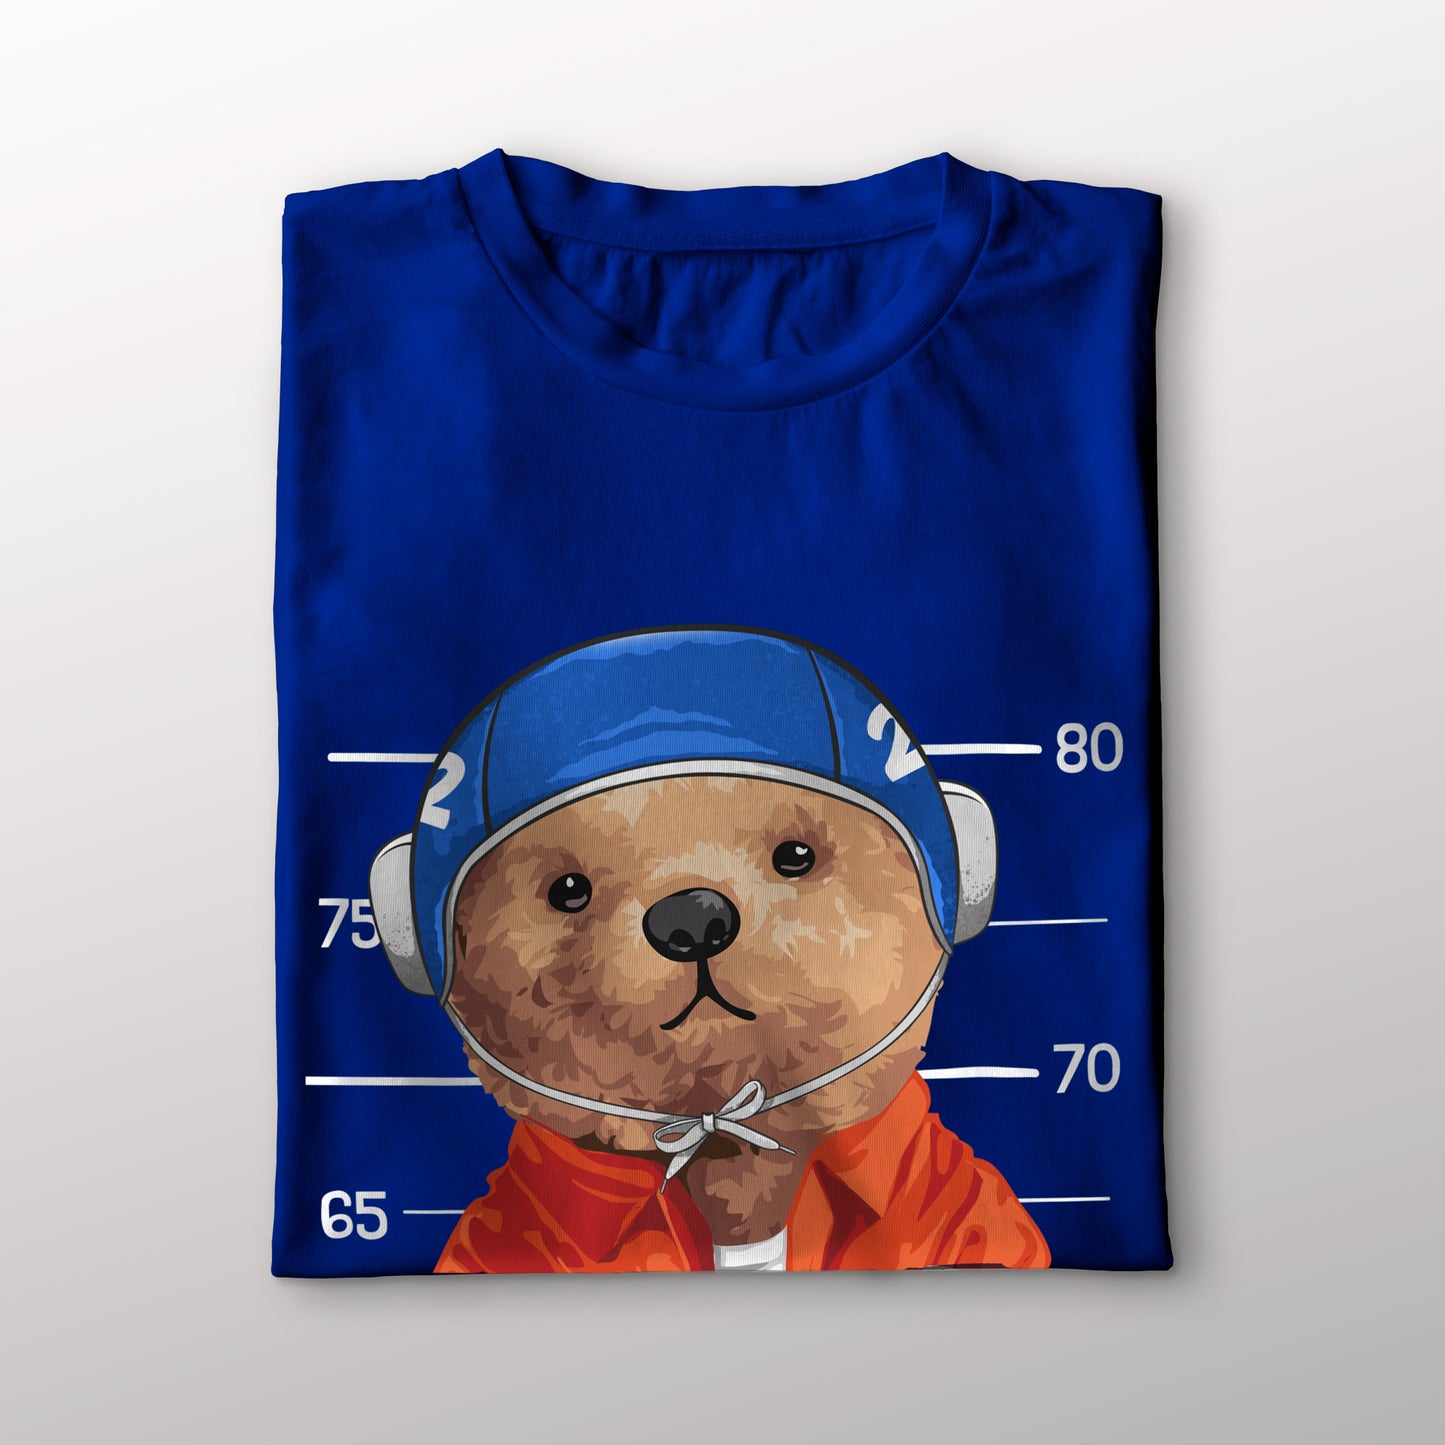 Exclusion Bear - Royal Blue Male t-shirt